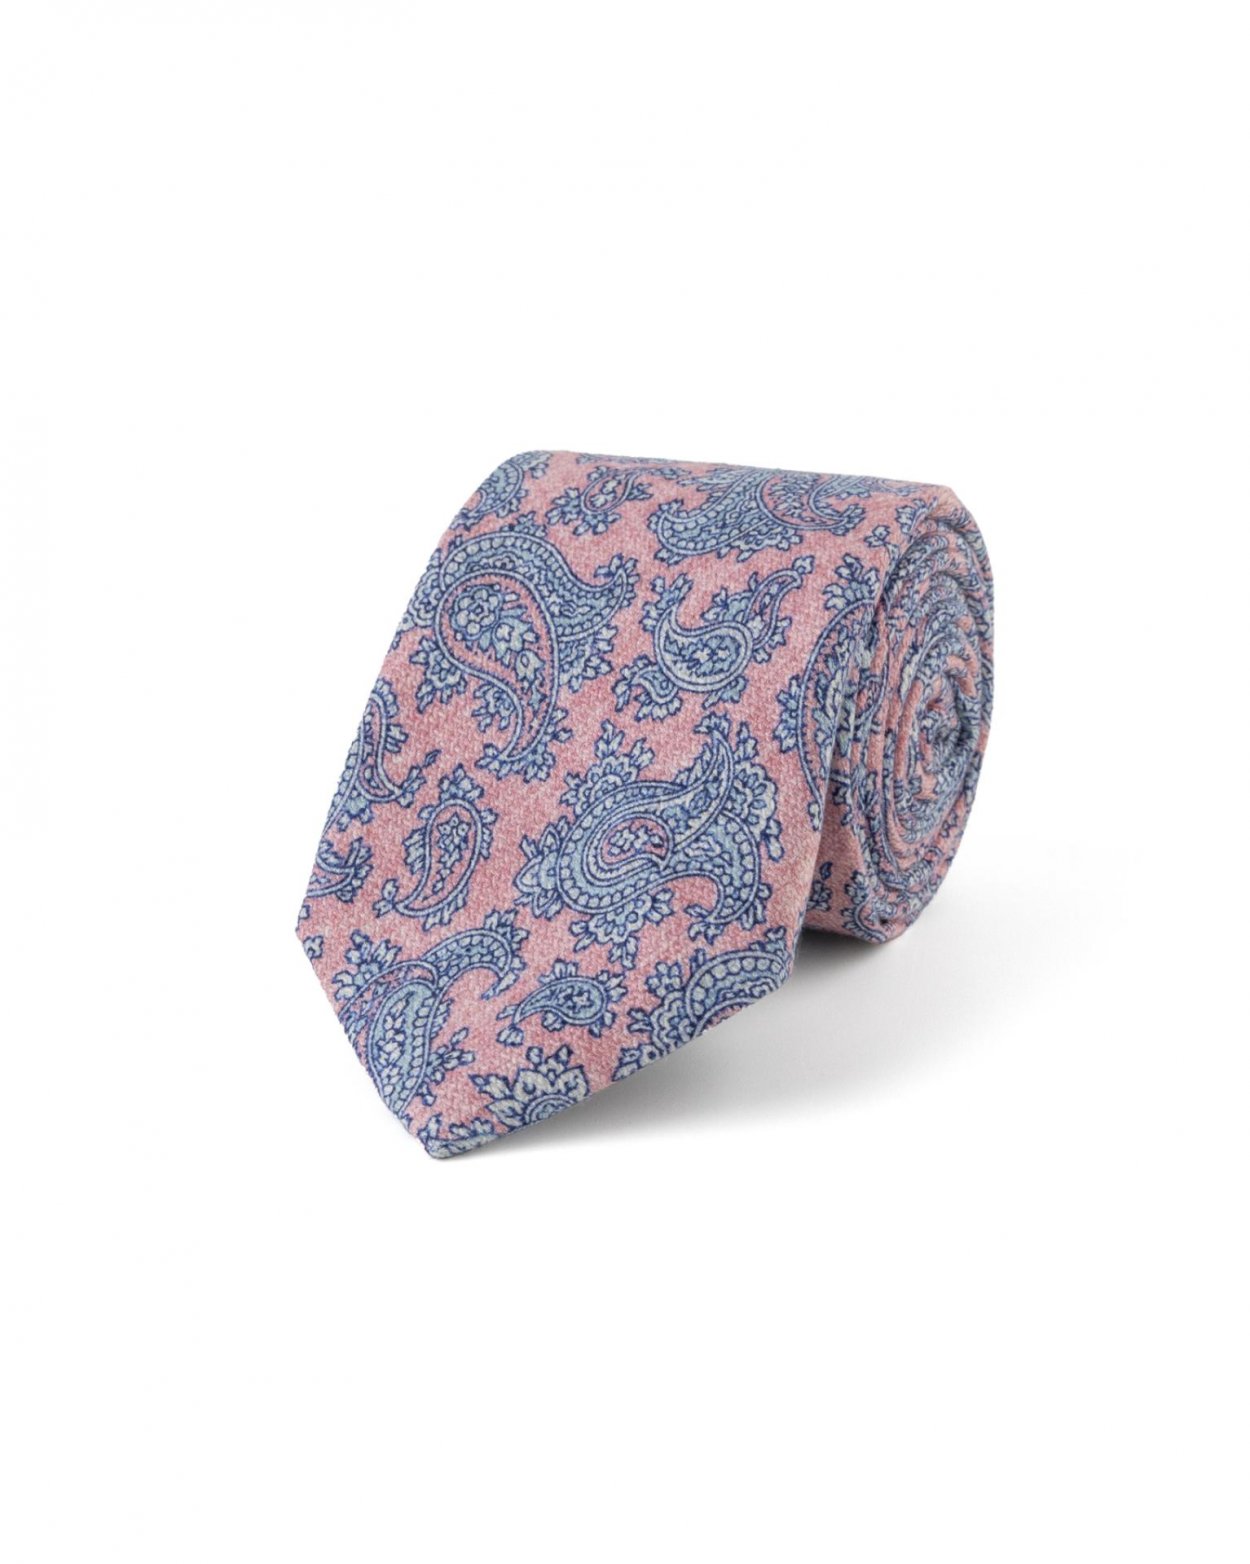 Růžovomodrá hedvábná kravata se vzorem